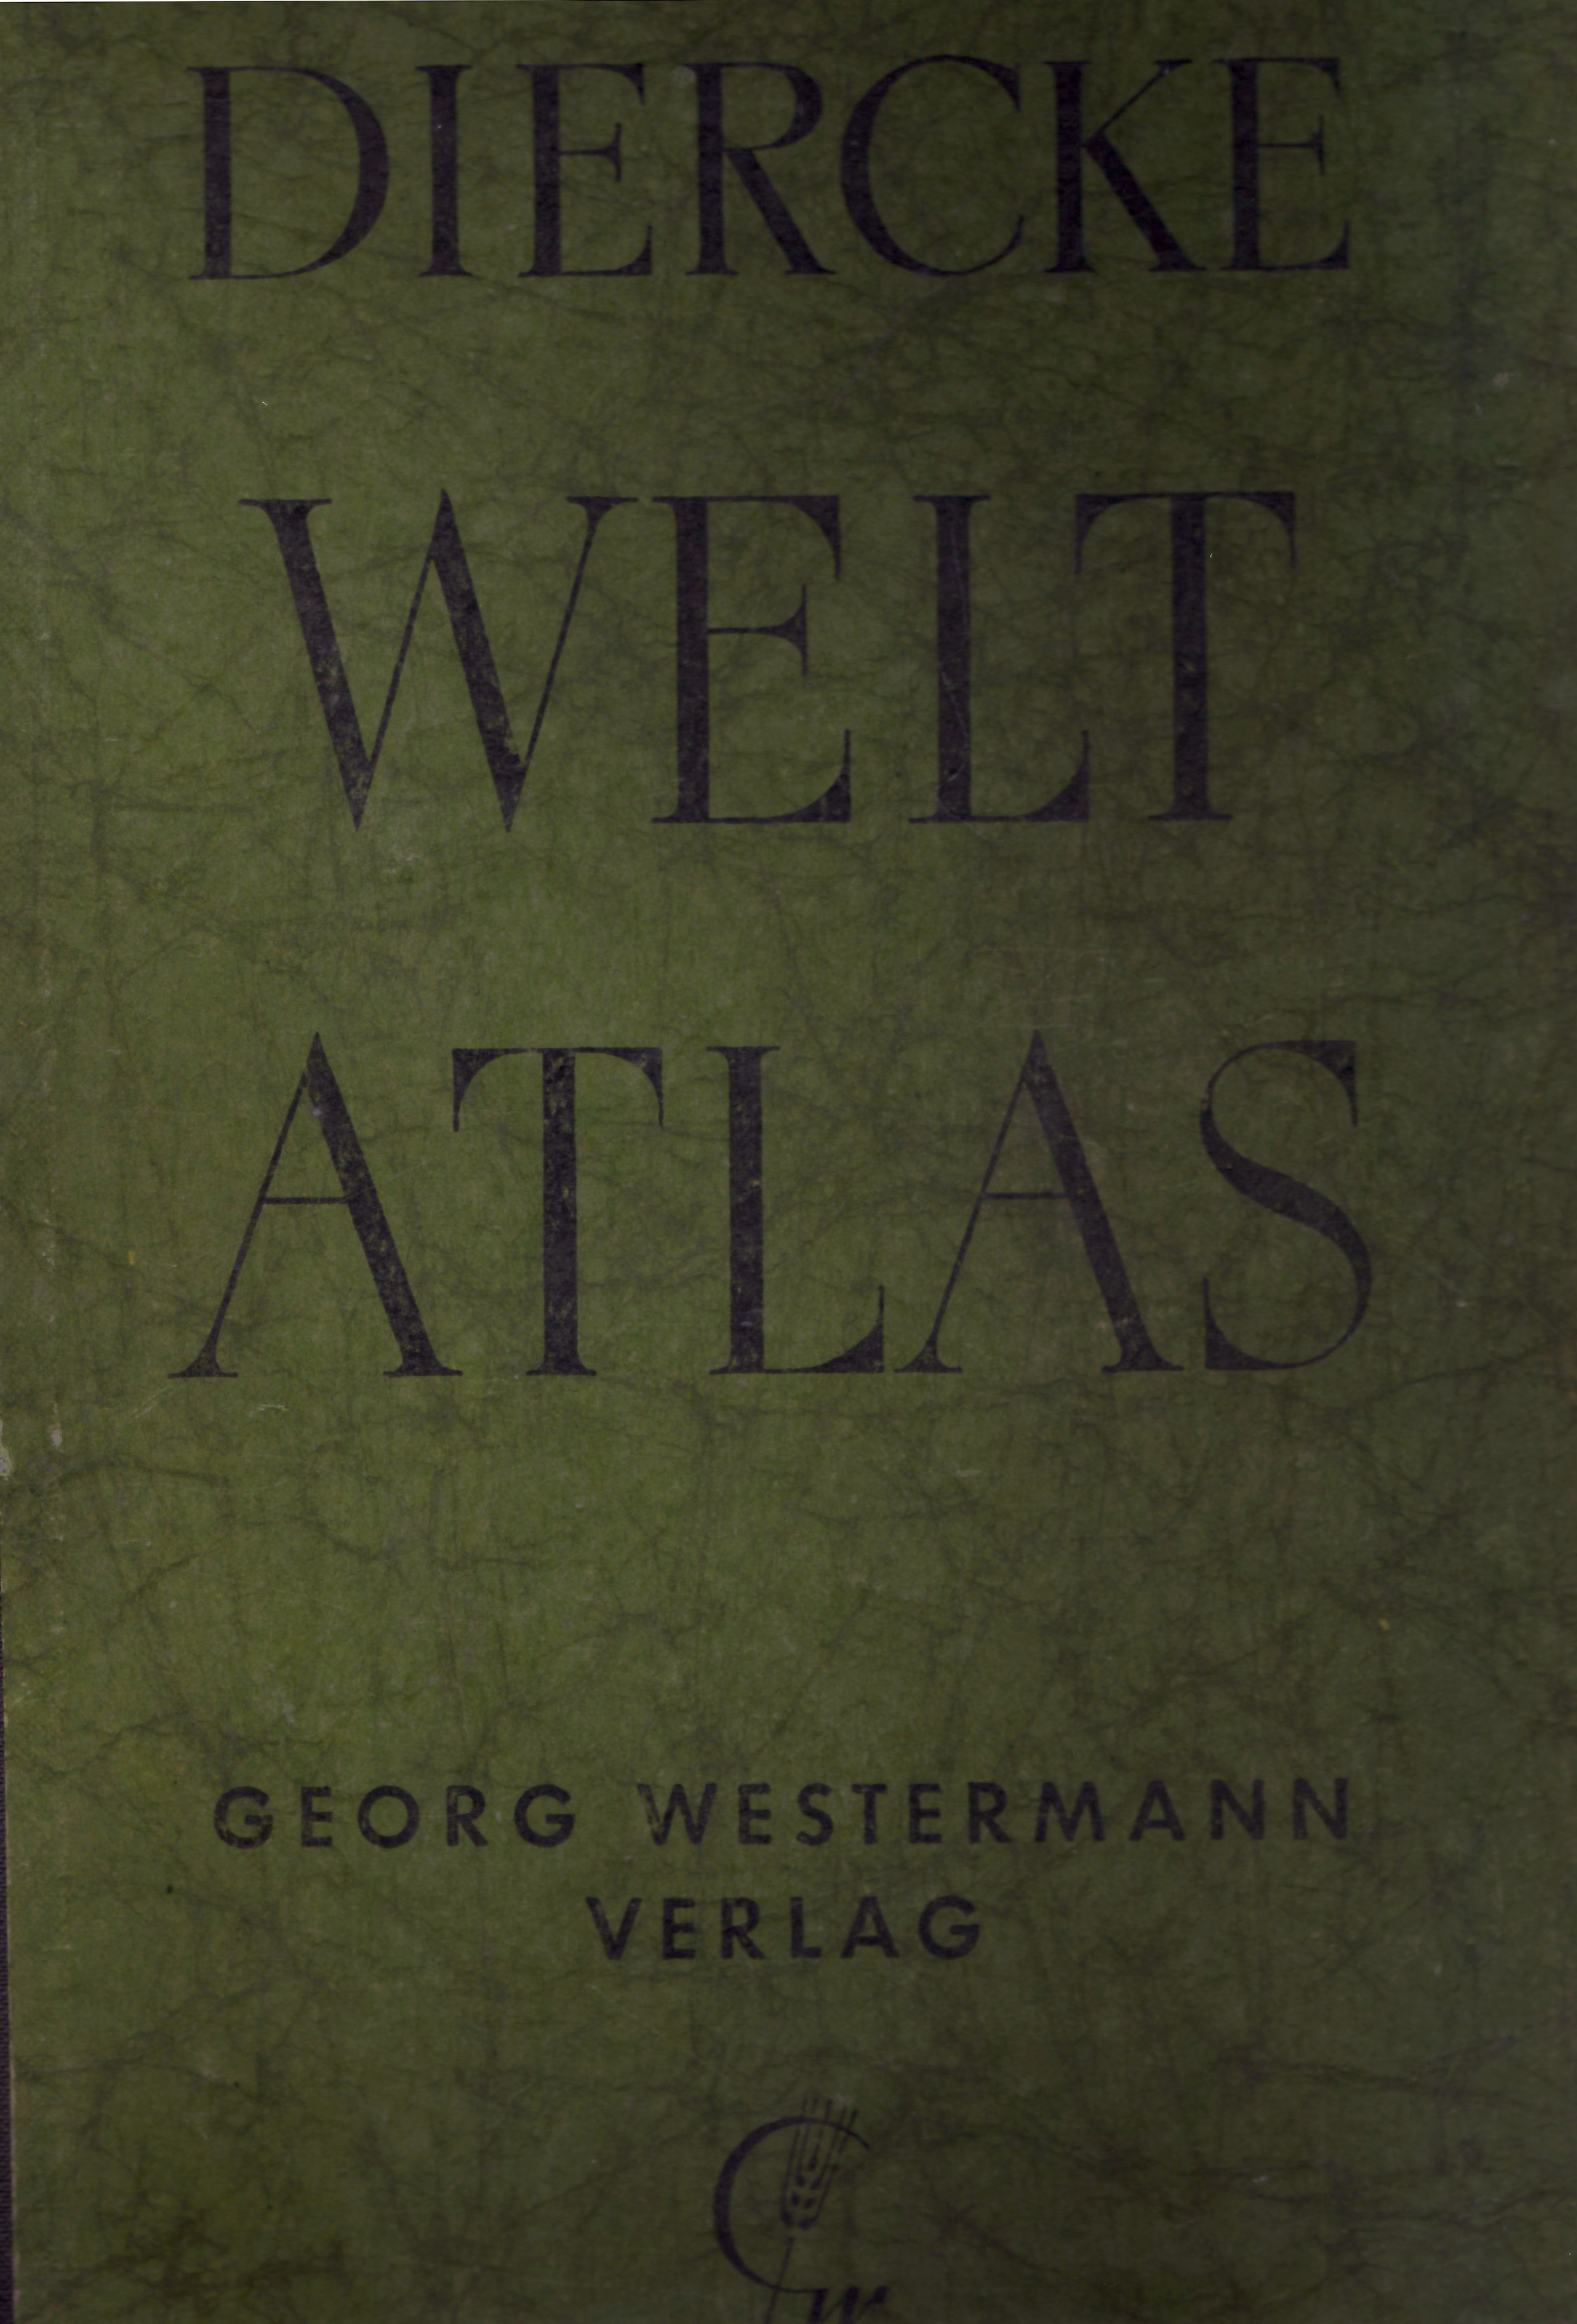 Dierecke Welt Atlas (Kulturverein Guntersblum CC BY-NC-SA)